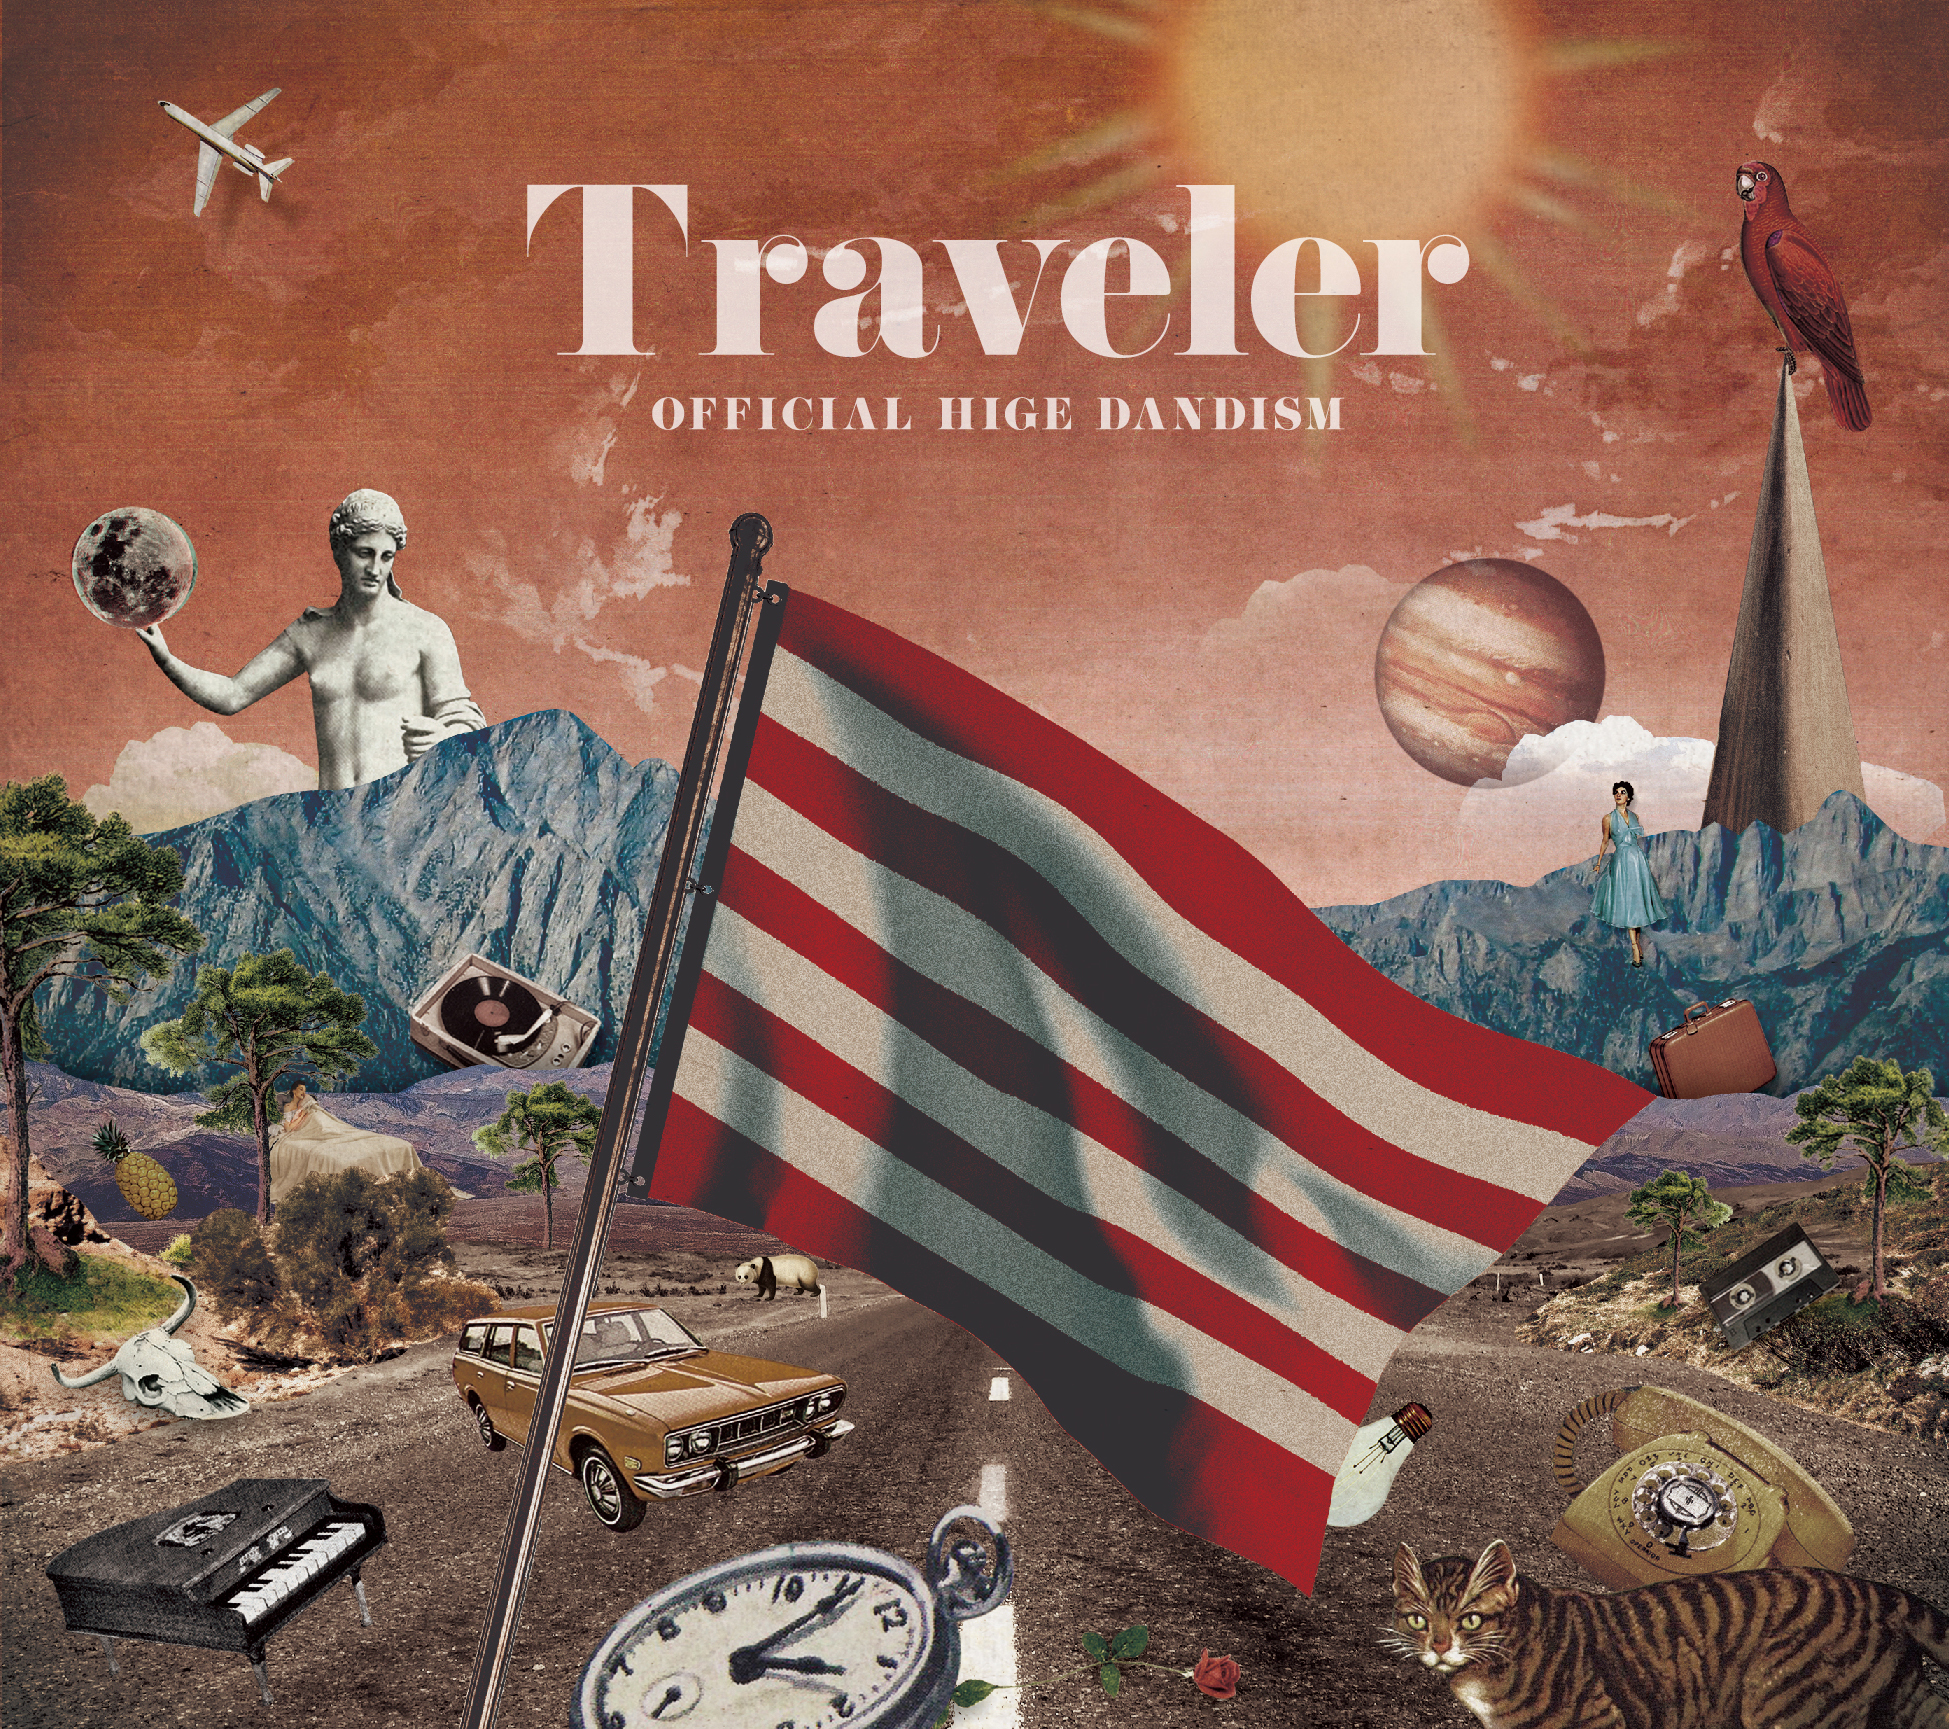 OFFICIAL HIGE DANDISM "Traveler" (CD+LIVE Blu-ray)